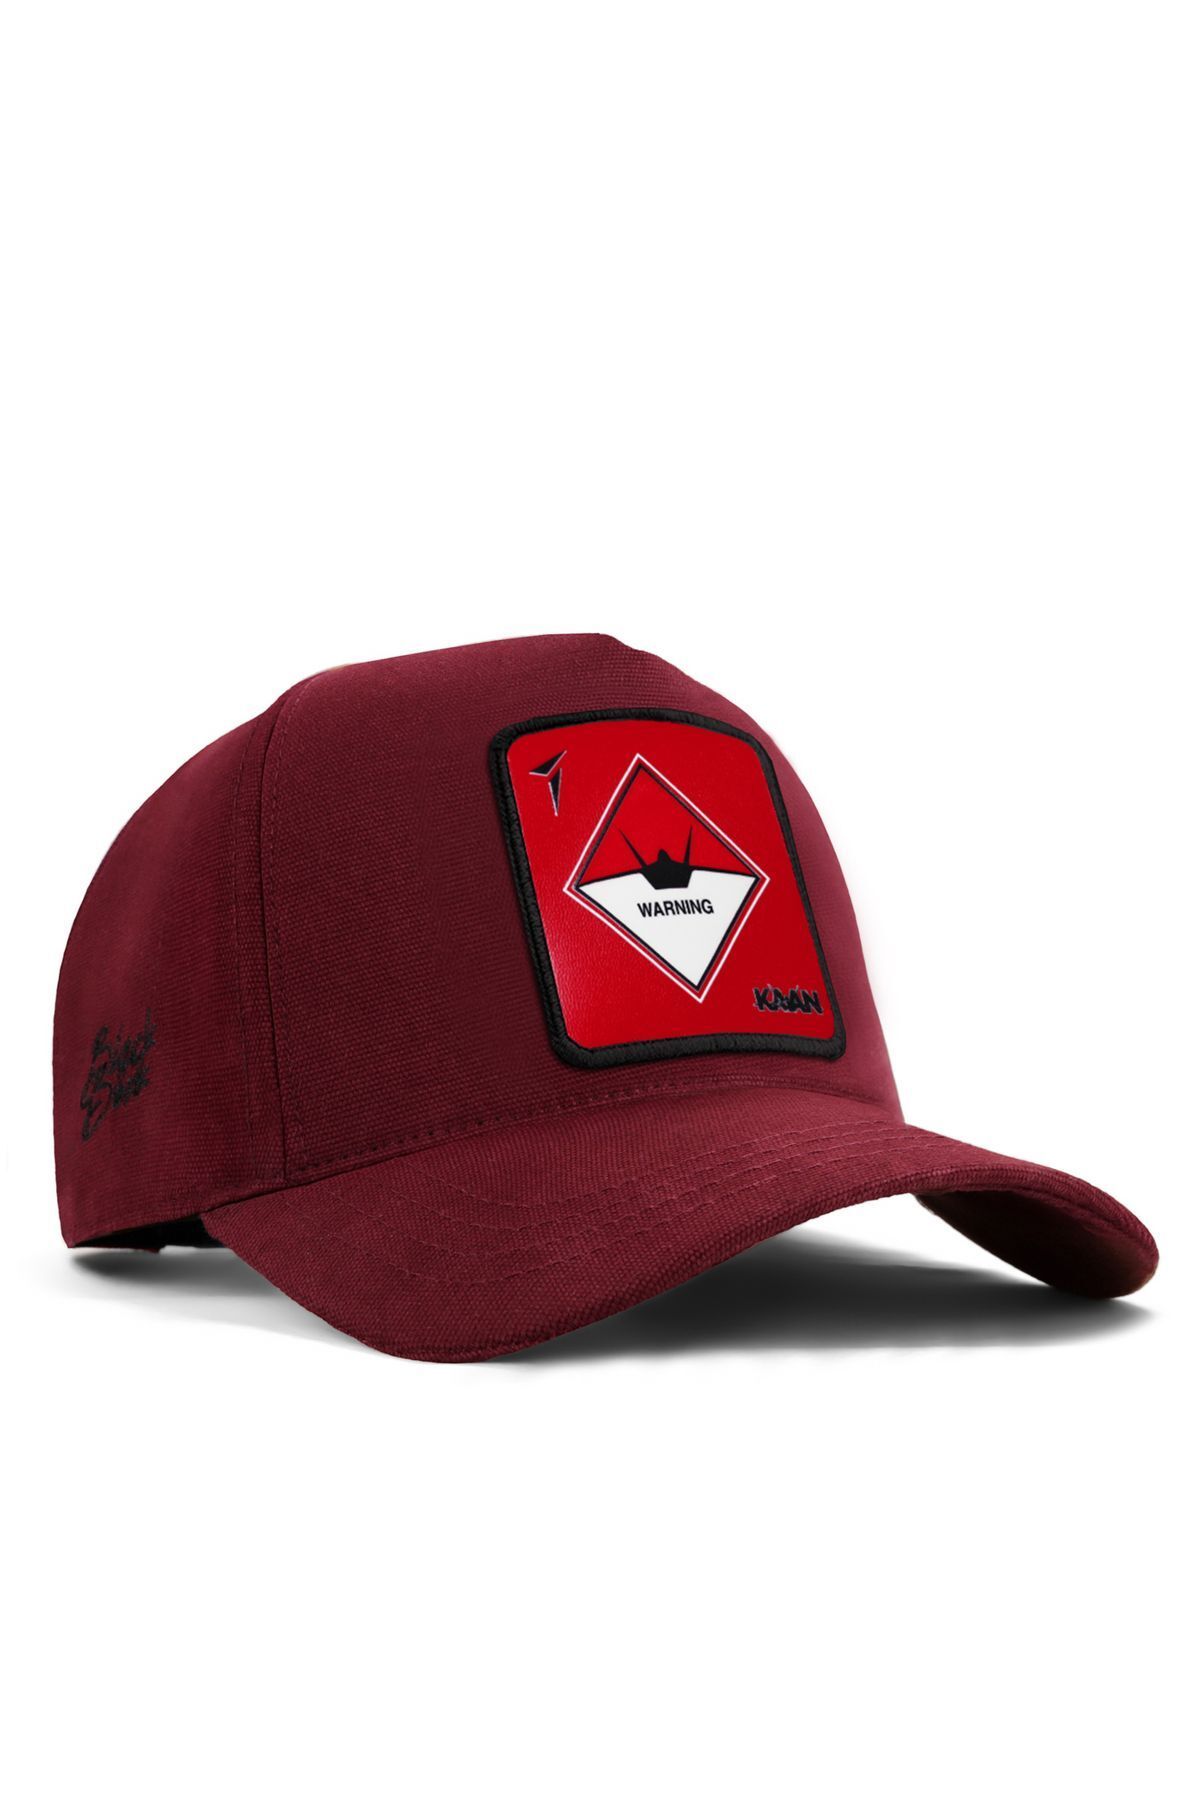 BlackBörk V1 Baseball Dikkat Kaan Lisanlı Bordo Şapka